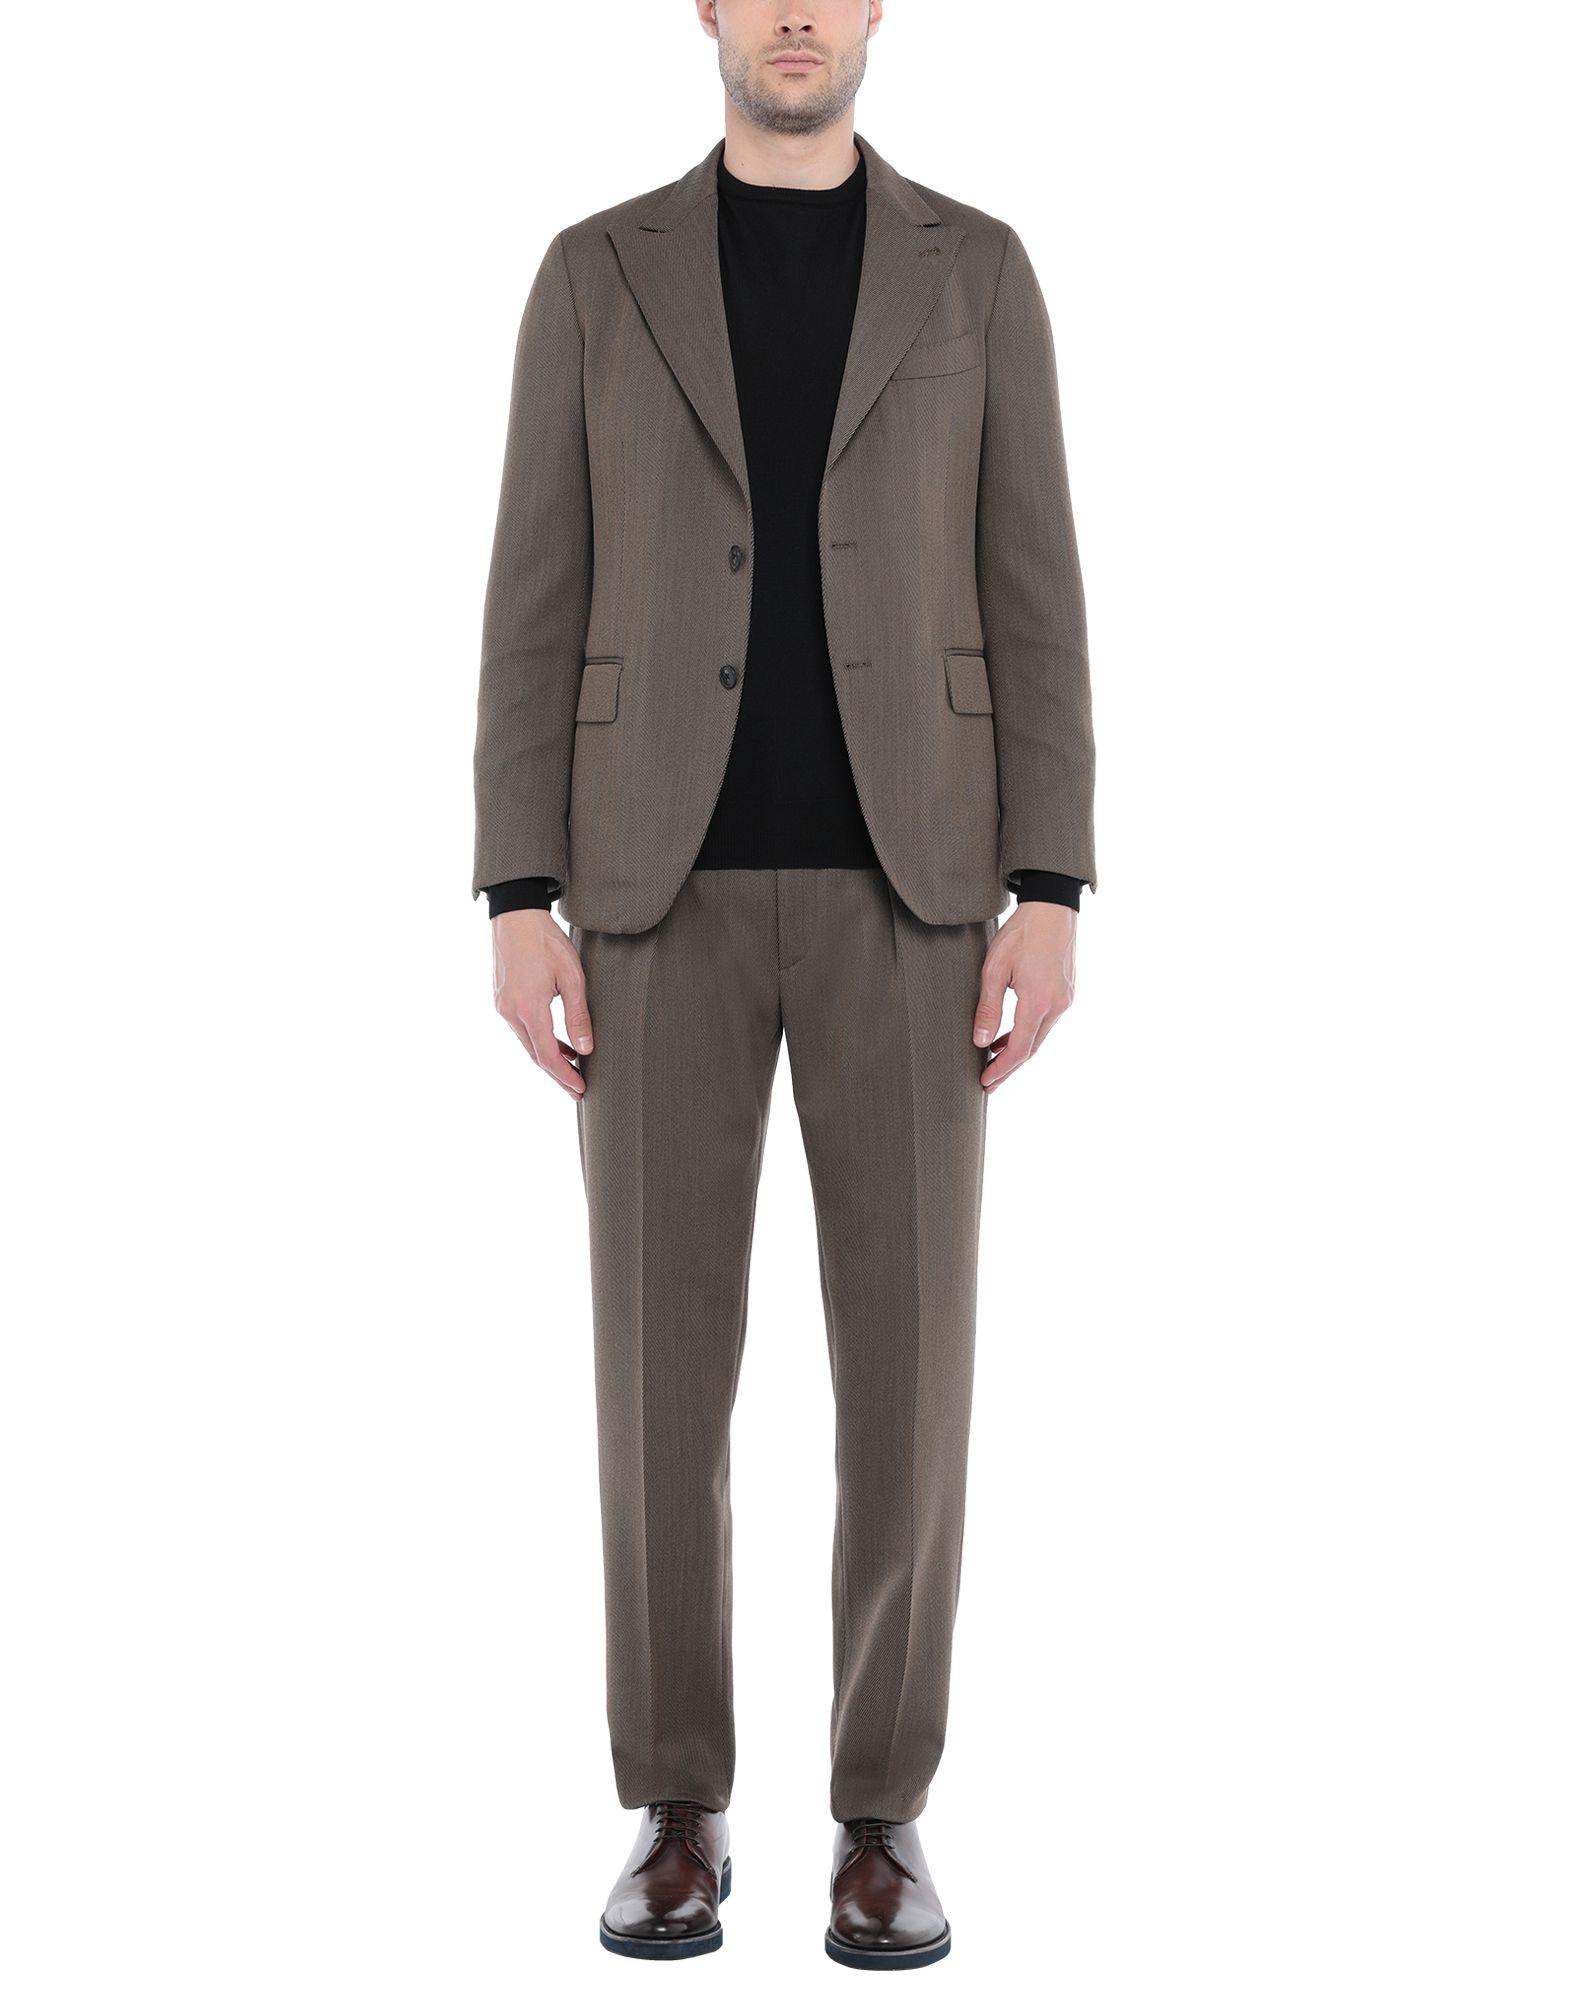 Gabriele Pasini Synthetic Suit in Khaki (Gray) for Men - Lyst